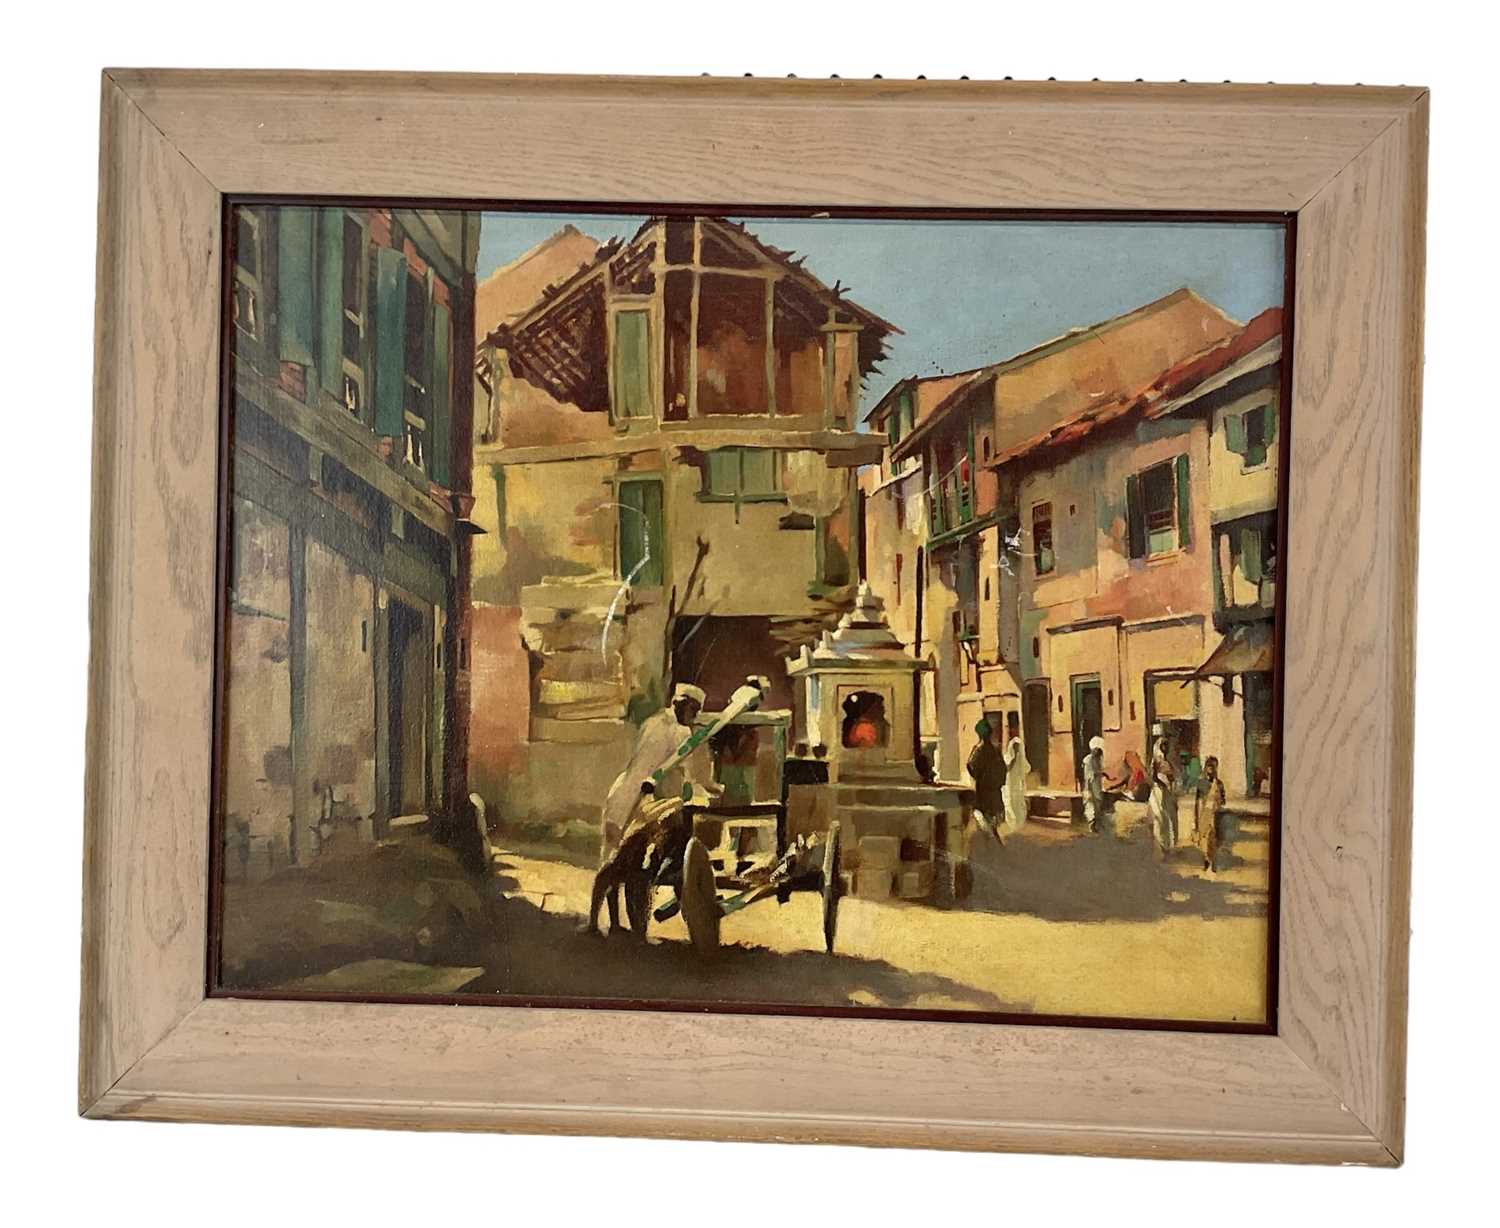 † ALEX TAYLOR; 20th century oil on board, 'Indian Village', 48 x 62cm, gilt framed. Provenance: